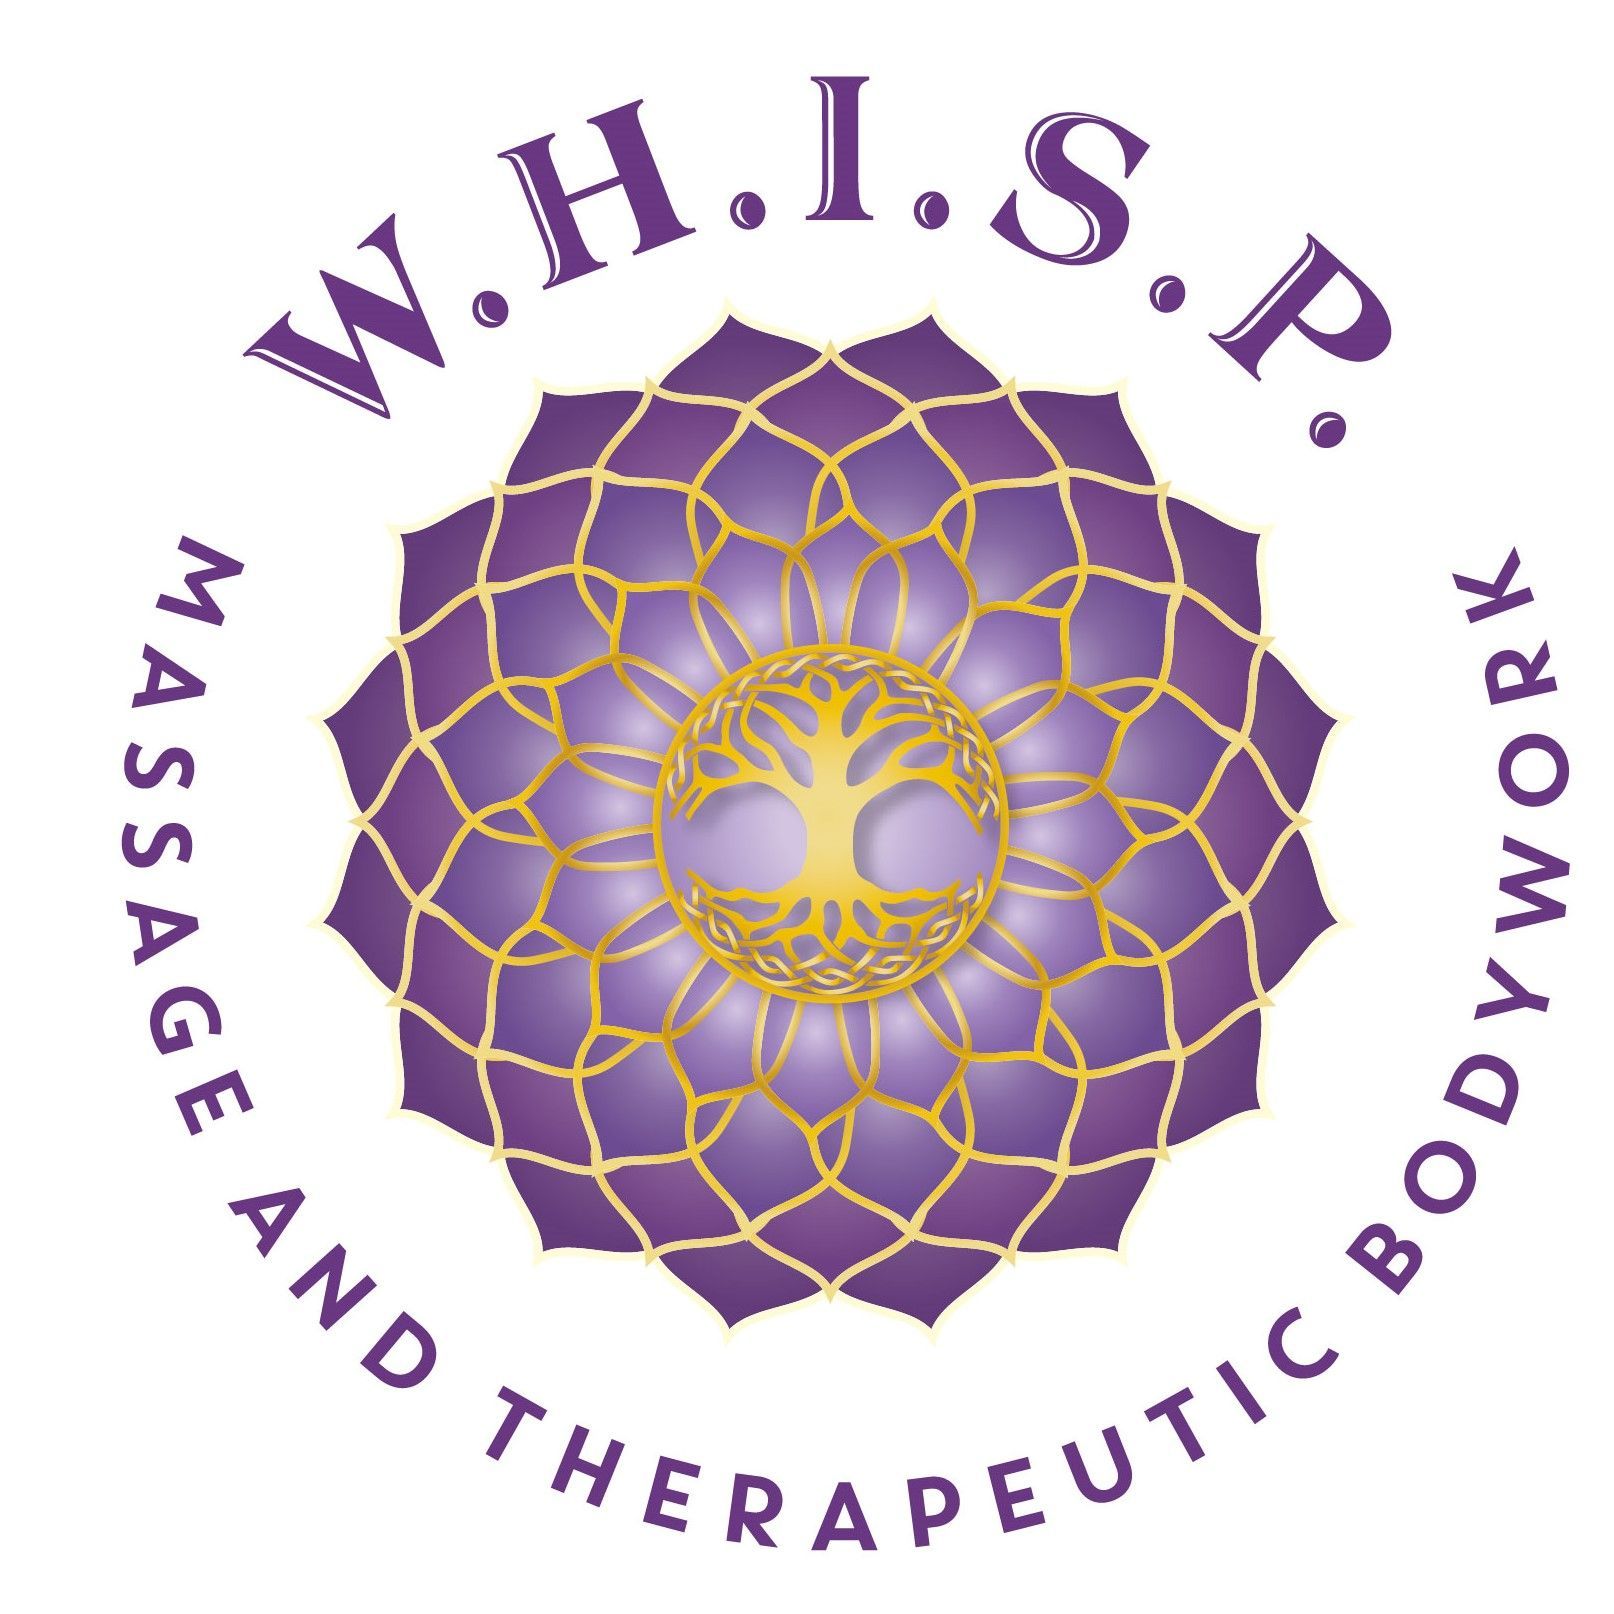 W.H.I.S.P. Massage and Therapeutic Bodywork